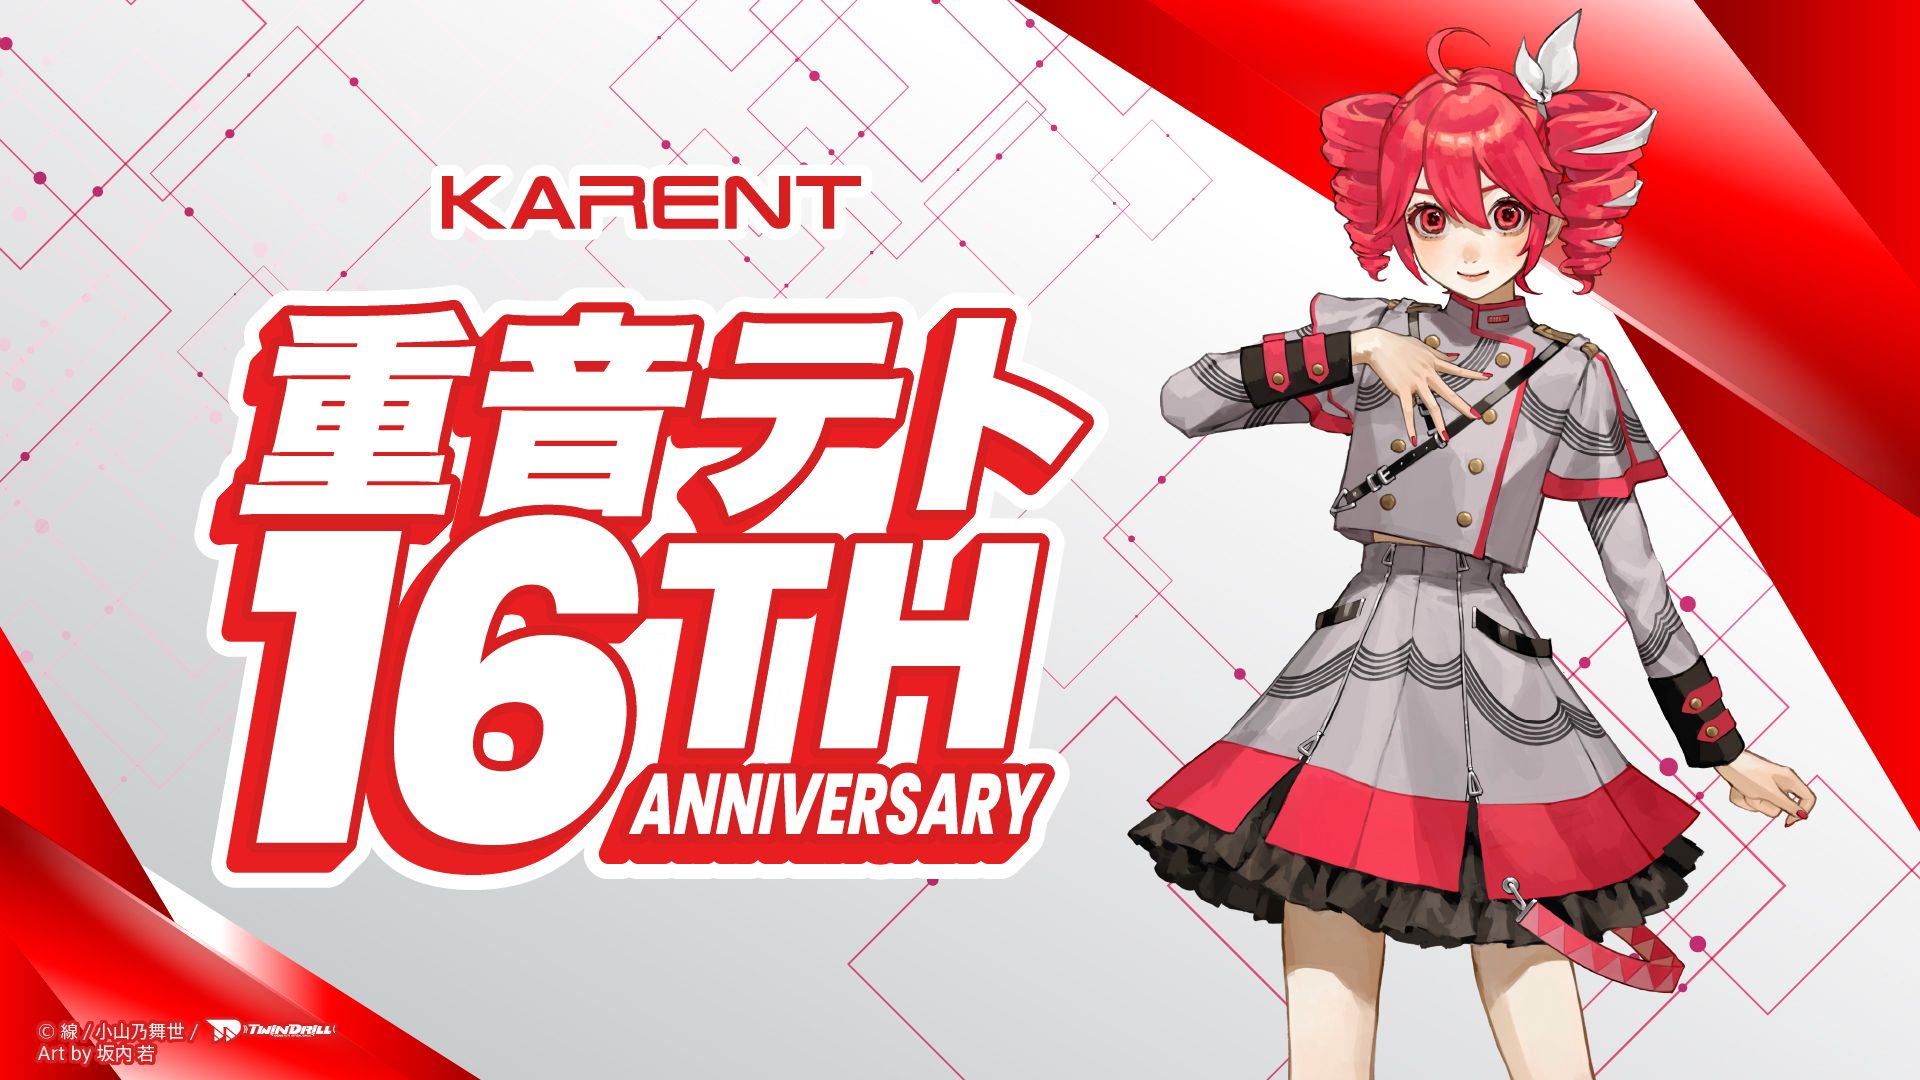 【KARENT特辑Special】重音TETO 16th Anniversary